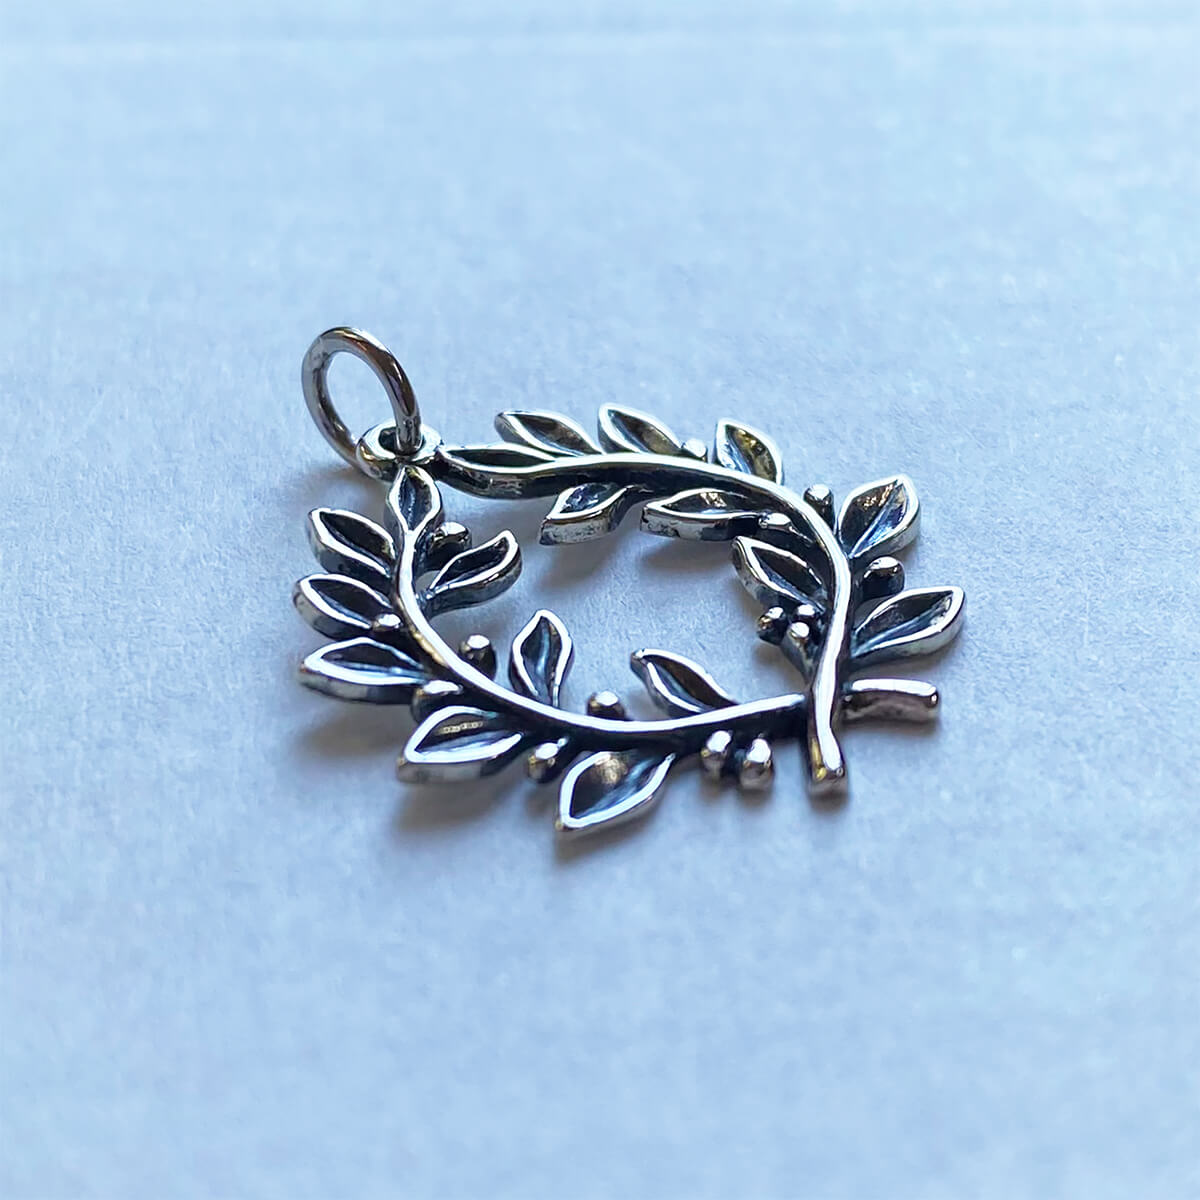 Realistic sterling silver laurel wreath pendant